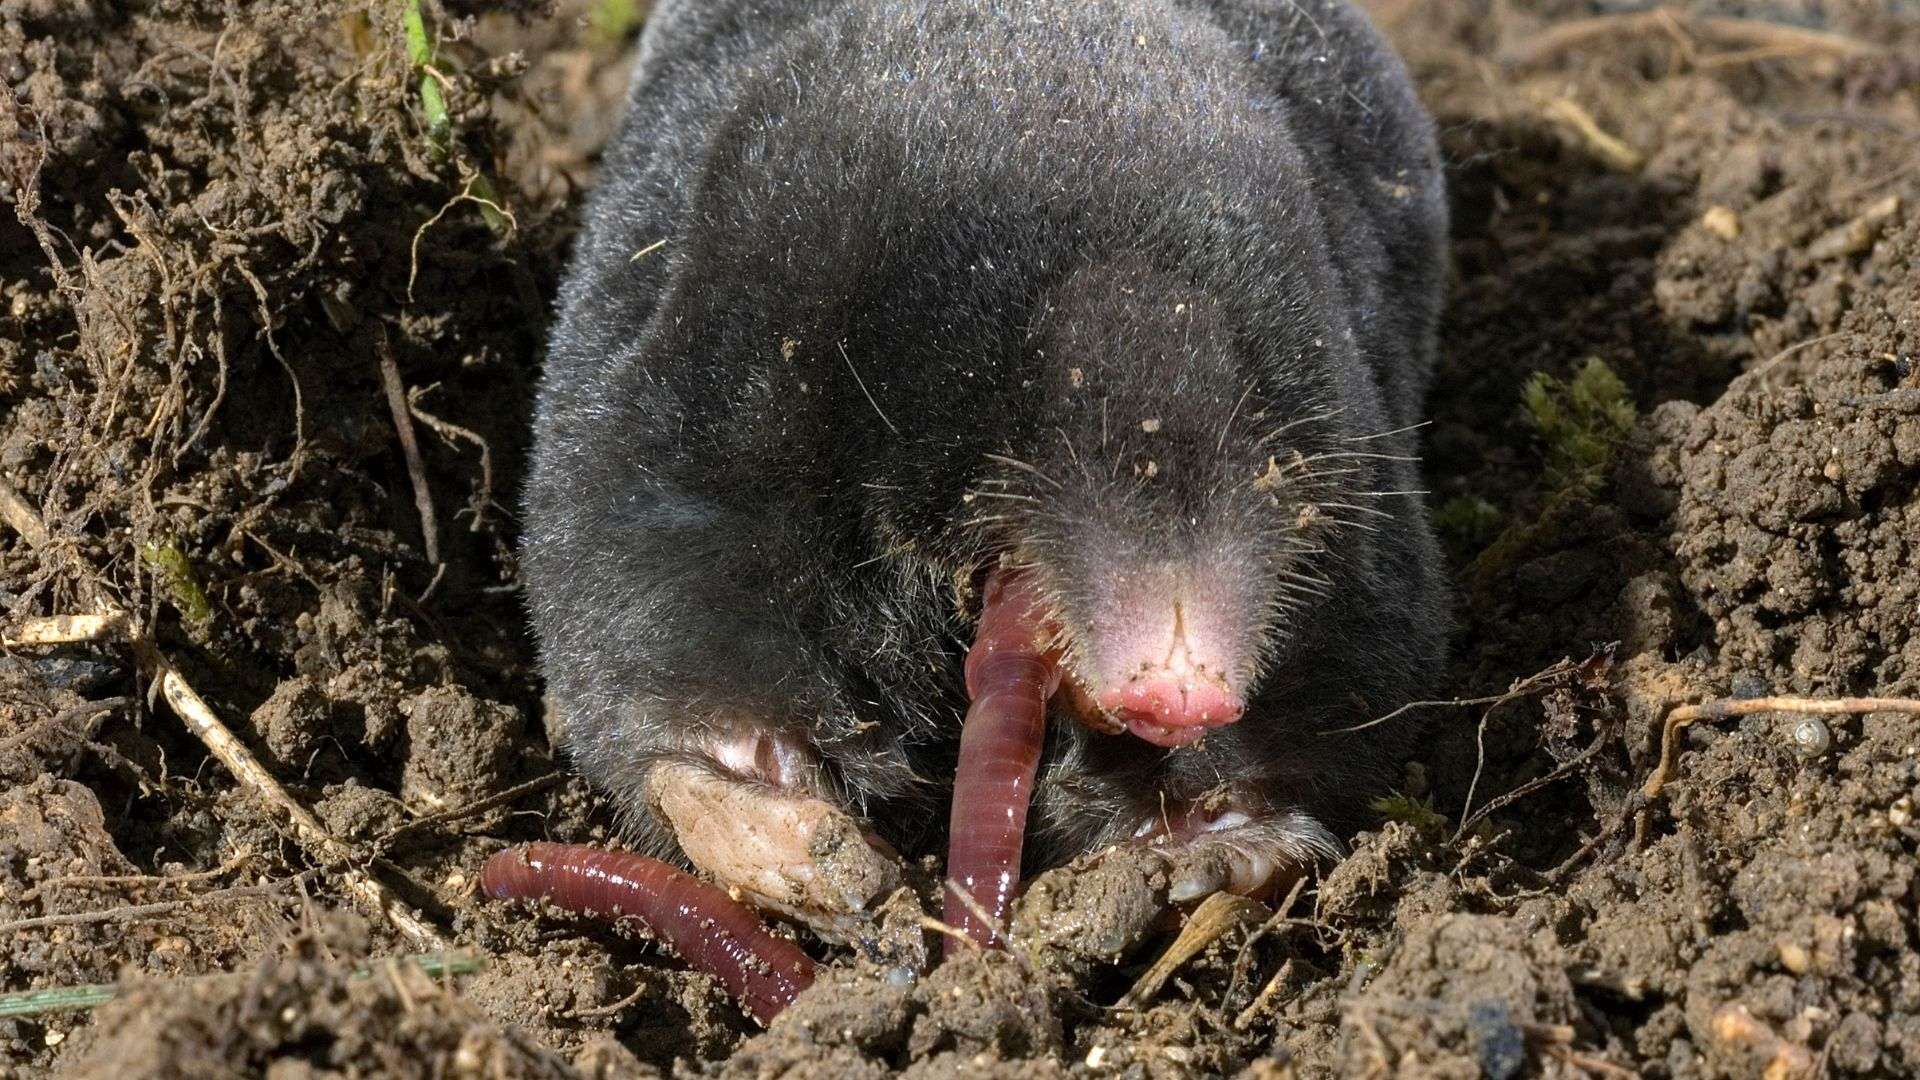 An image of a mole eating an earthworm.